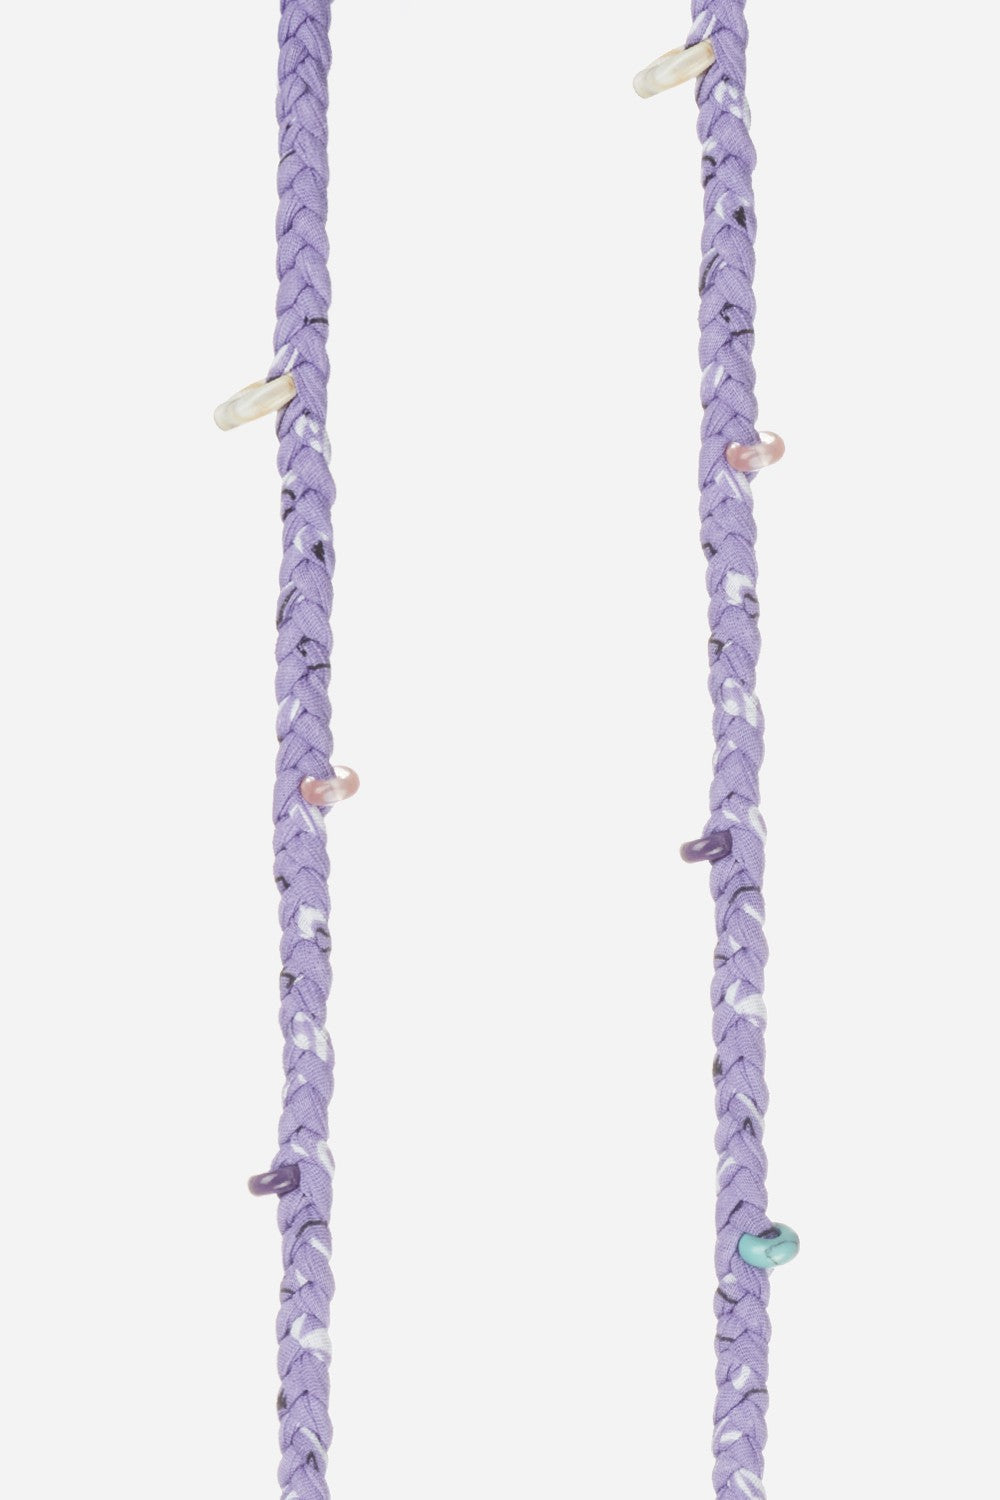 Chaine Longue ARIZONA X LCF Poe Violet 120 cm